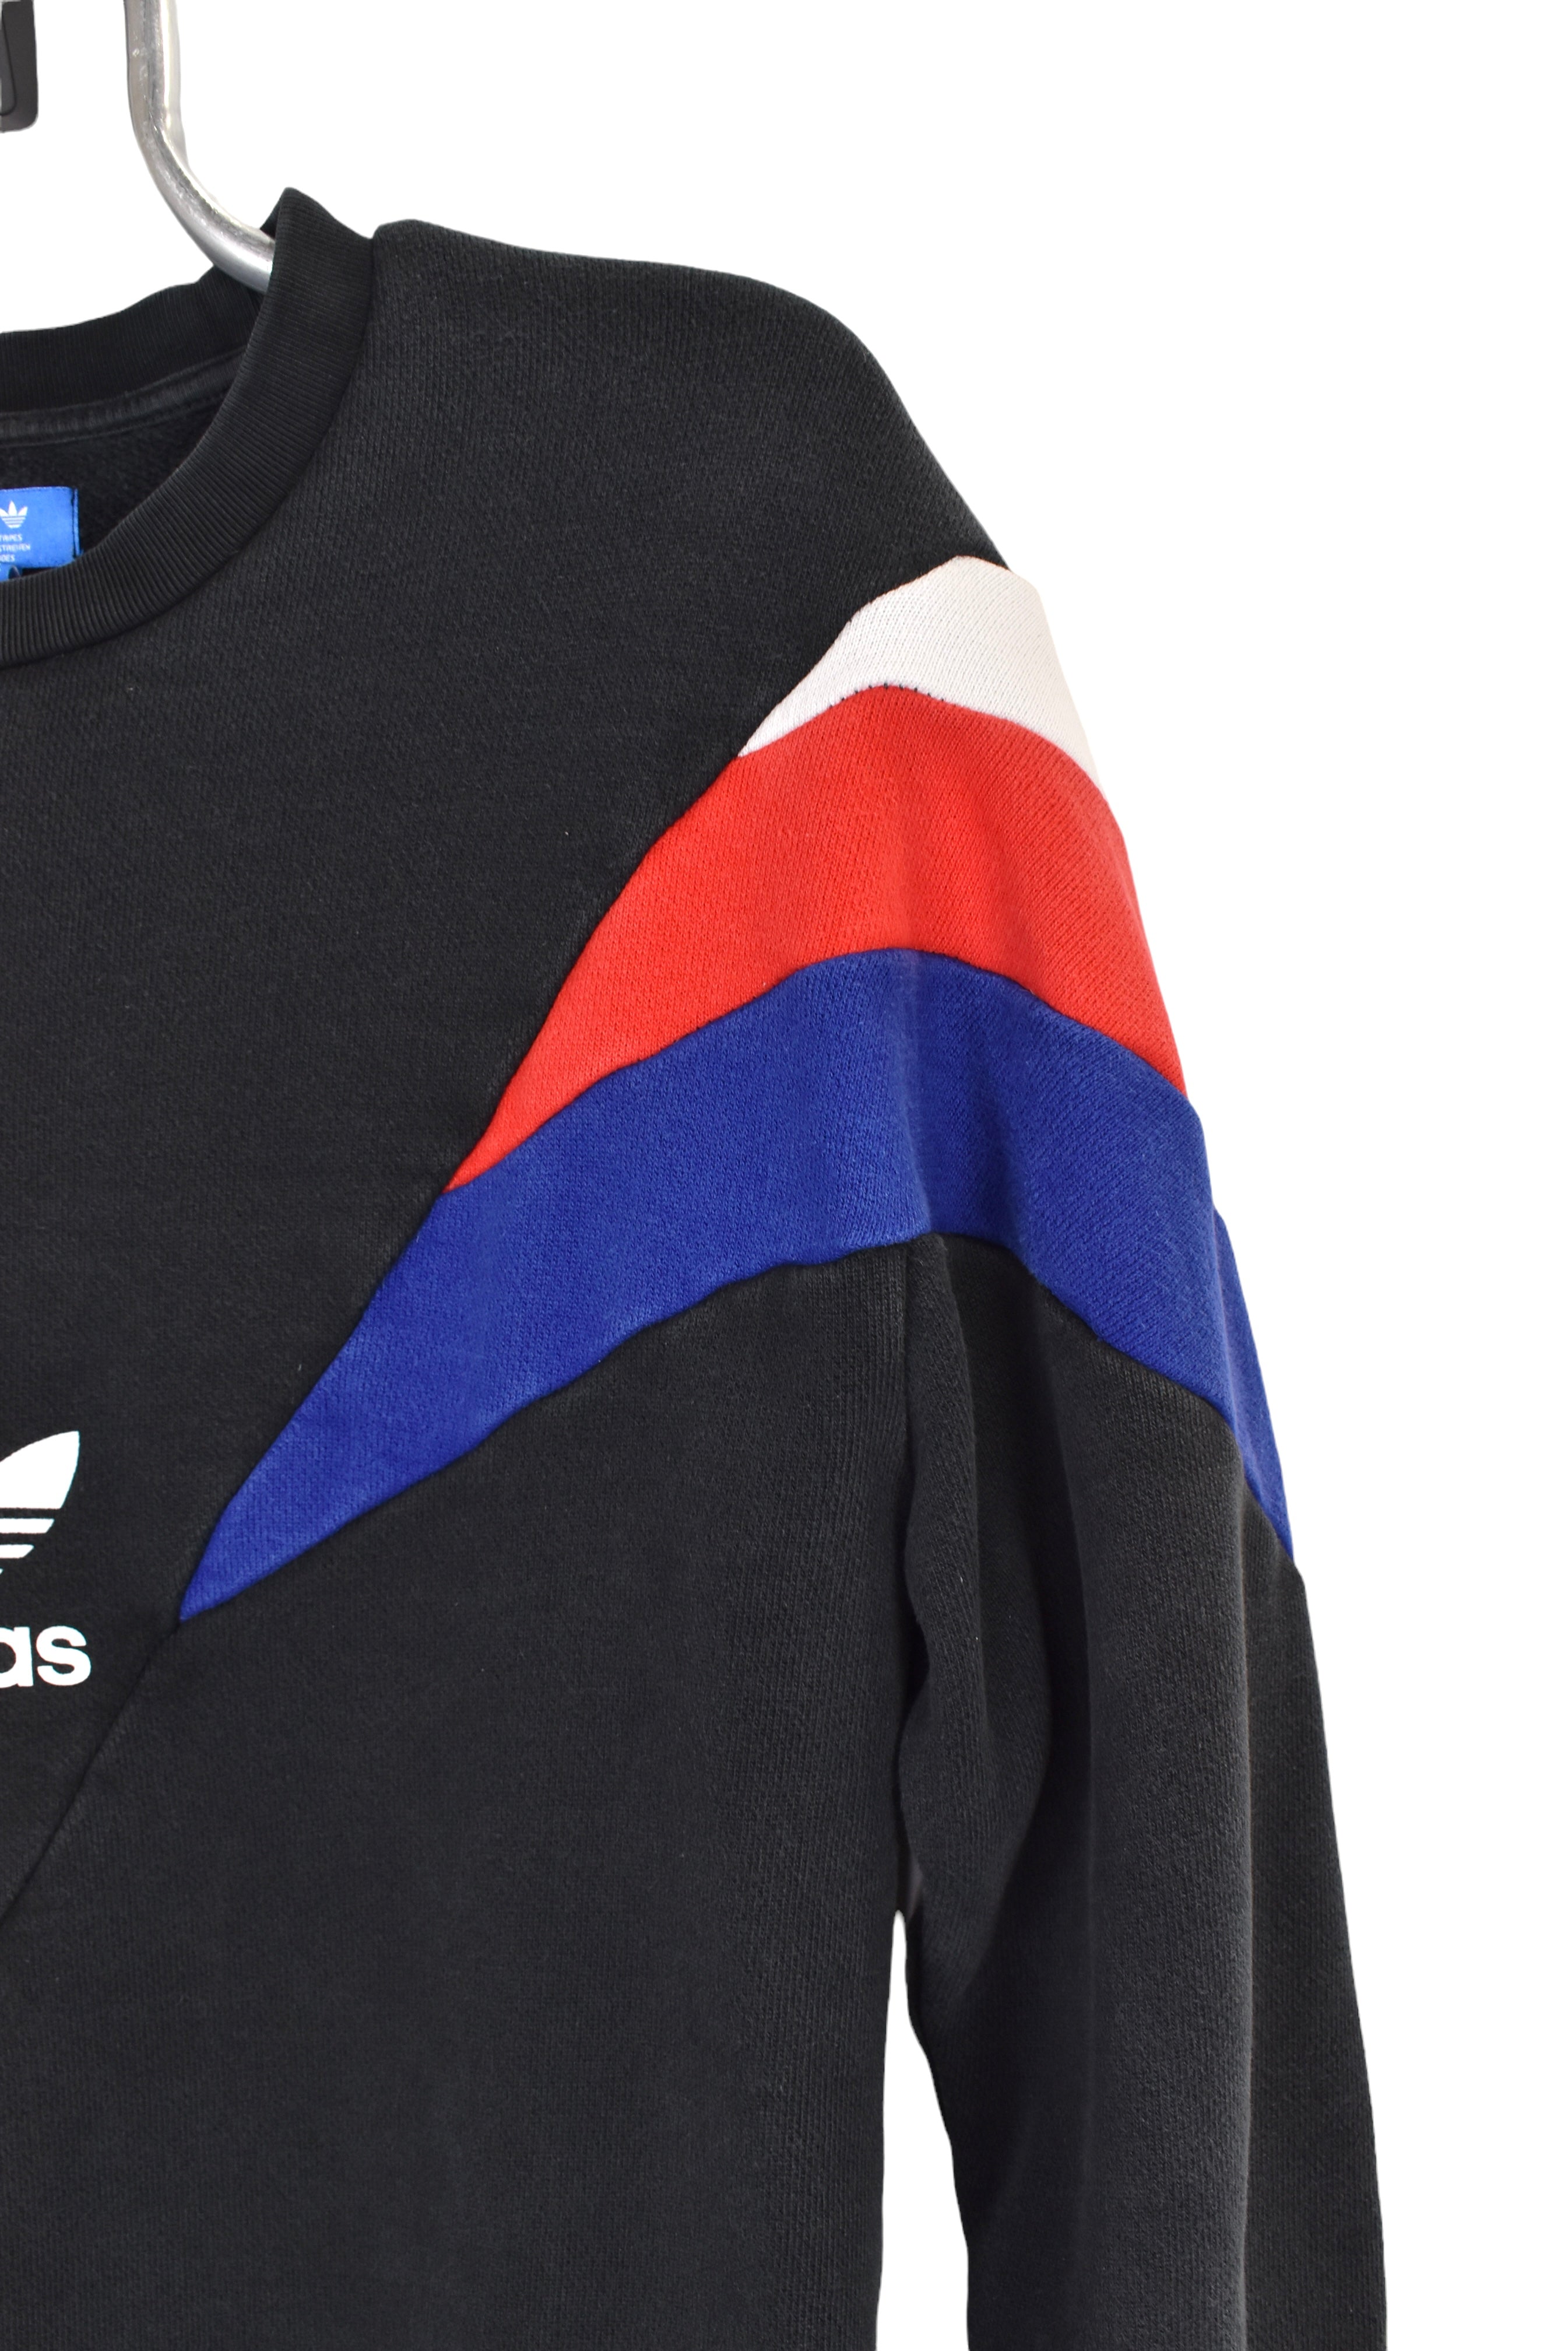 Vintage Adidas sweatshirt (M), black graphic crewneck